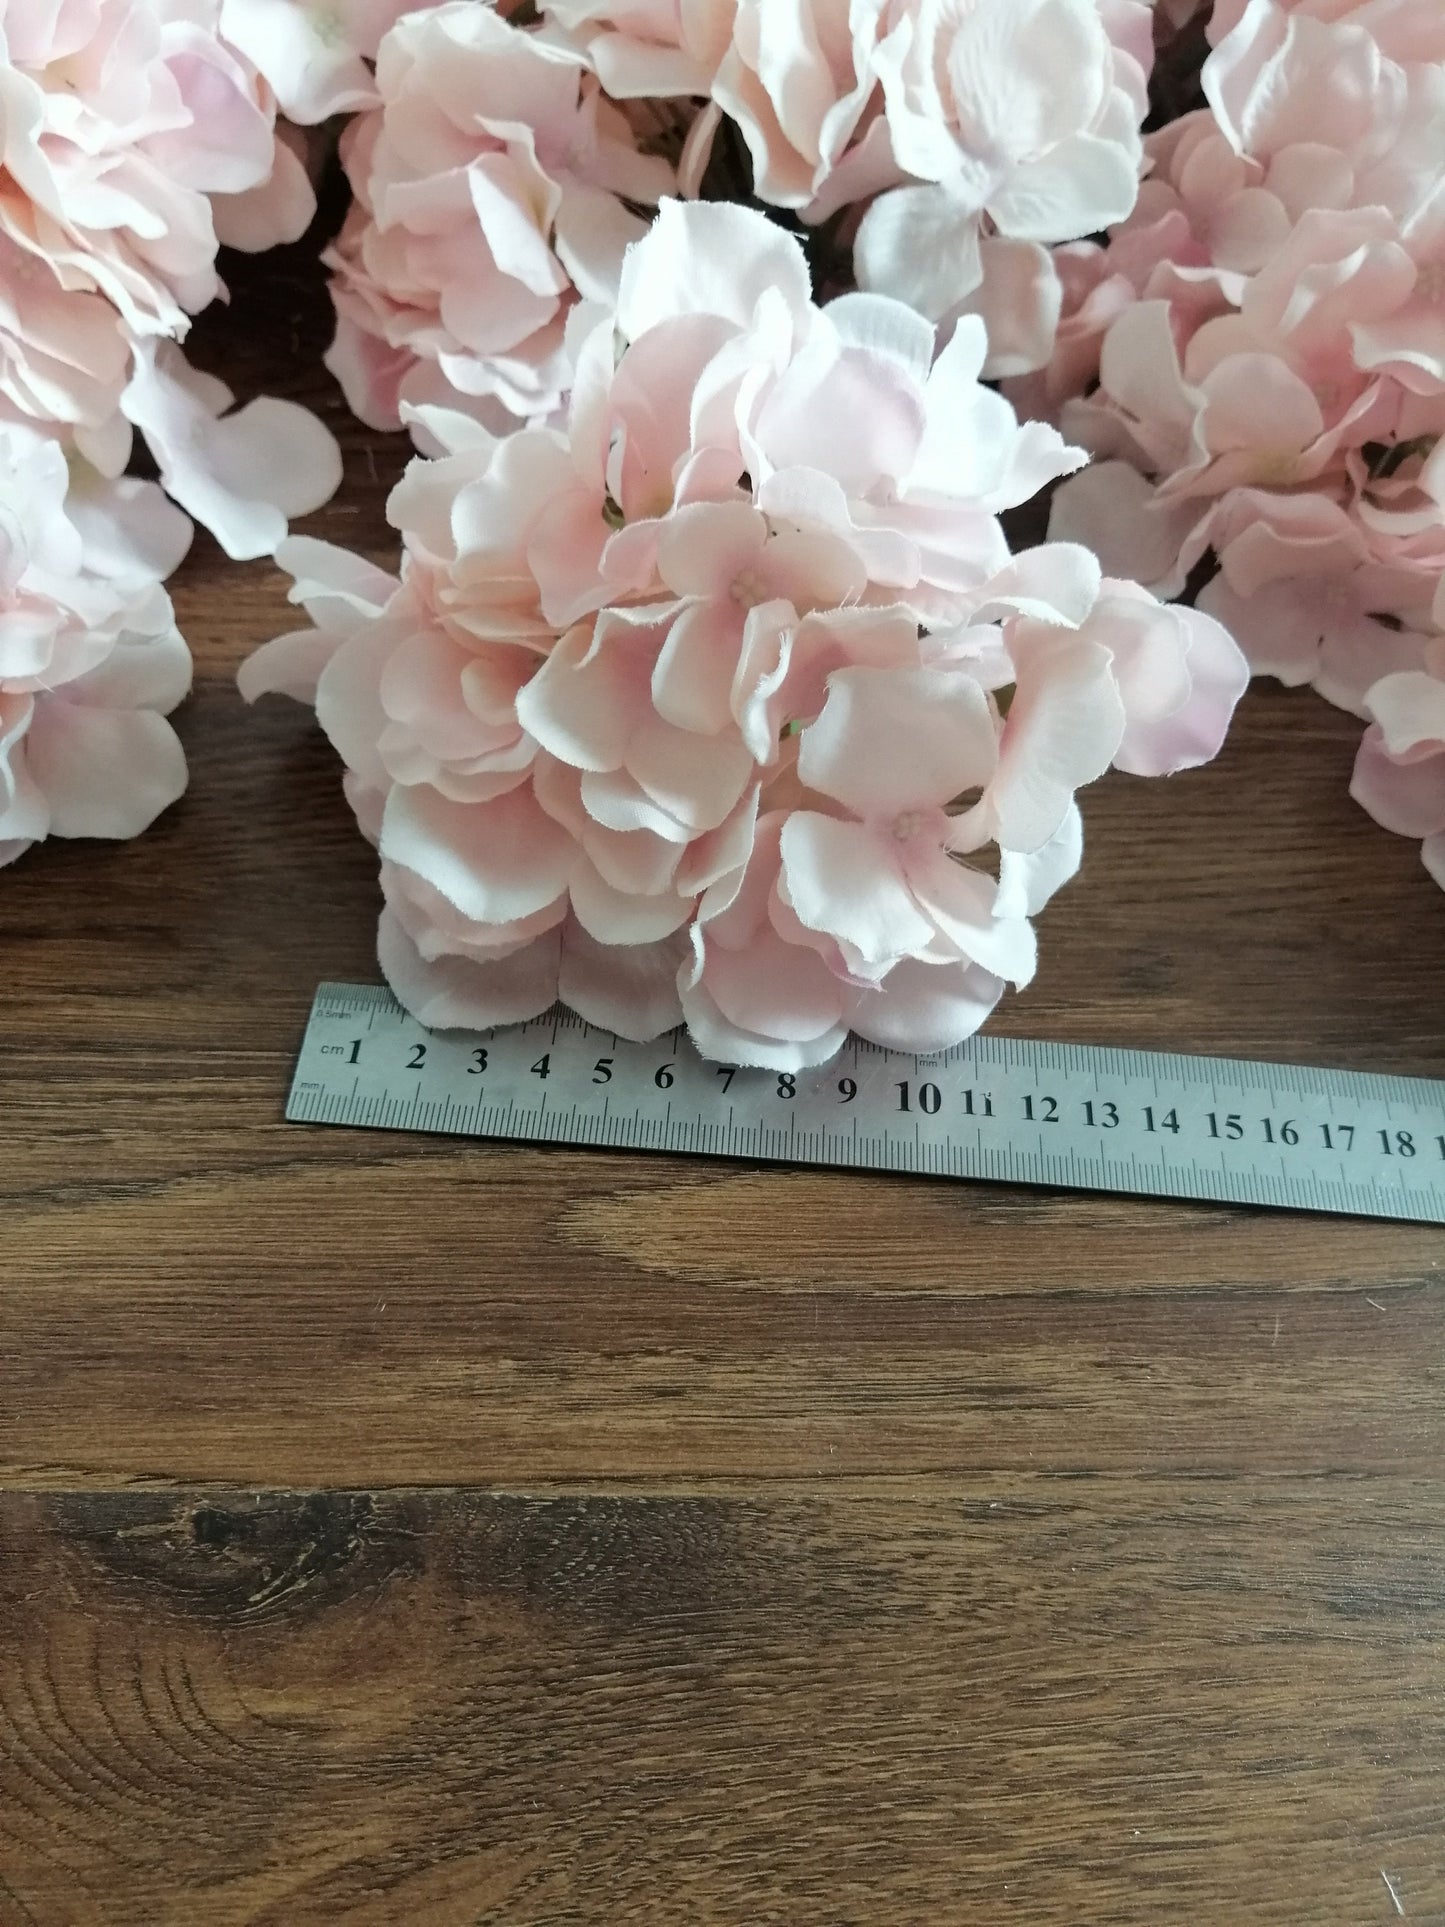 Wholesale Baby Pink Wedding Hydrangeas Flowers 50 Heads Diam.15cm DIY Wedding Bride Shower Baby Shower DIY Decoration